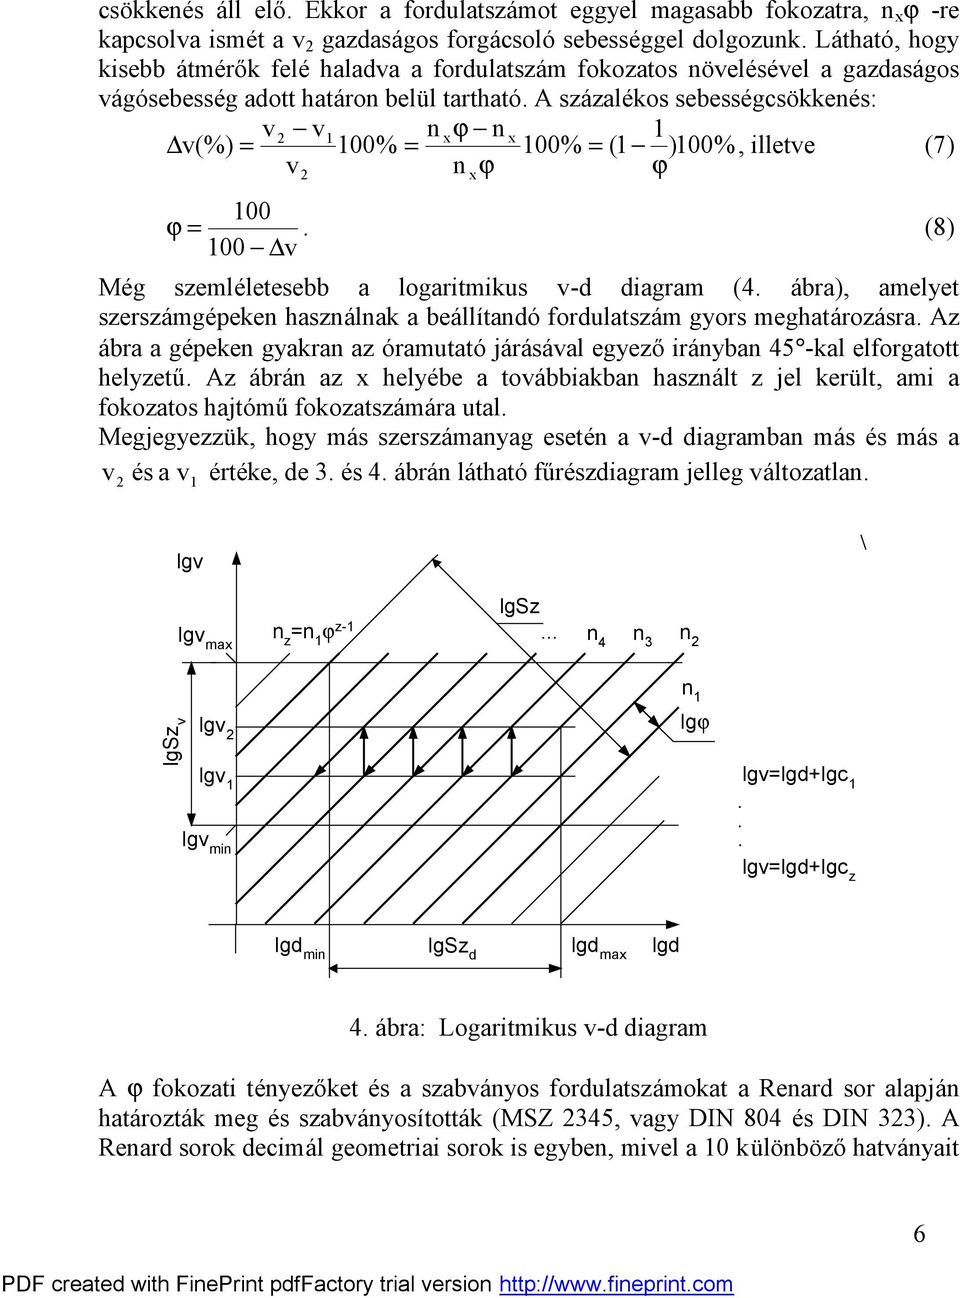 A sá aléos sebességcsö eés: v v xϕ x v(%) 00% 00% ( )00%, illetve (7) v ϕ ϕ x 00 ϕ. (8) 00 v Még semléletesebb a logaritmius v-d diagram (.